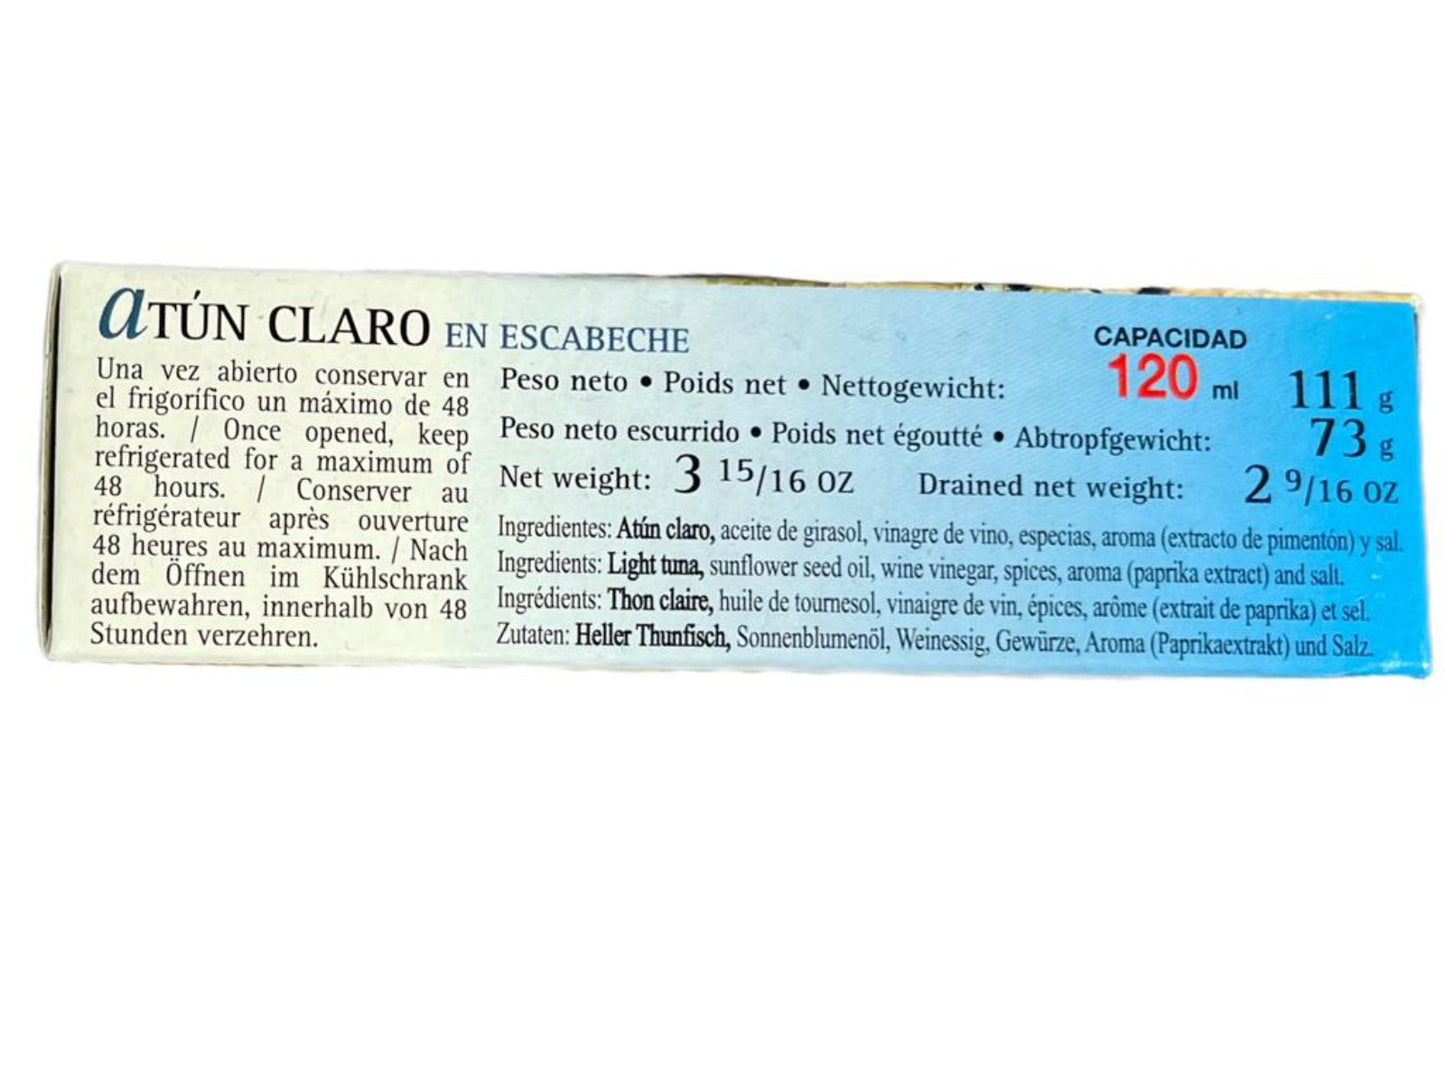 Vigilante Atun Claro en Escabeche Spain - Tuna in Pickled Sauce 111g